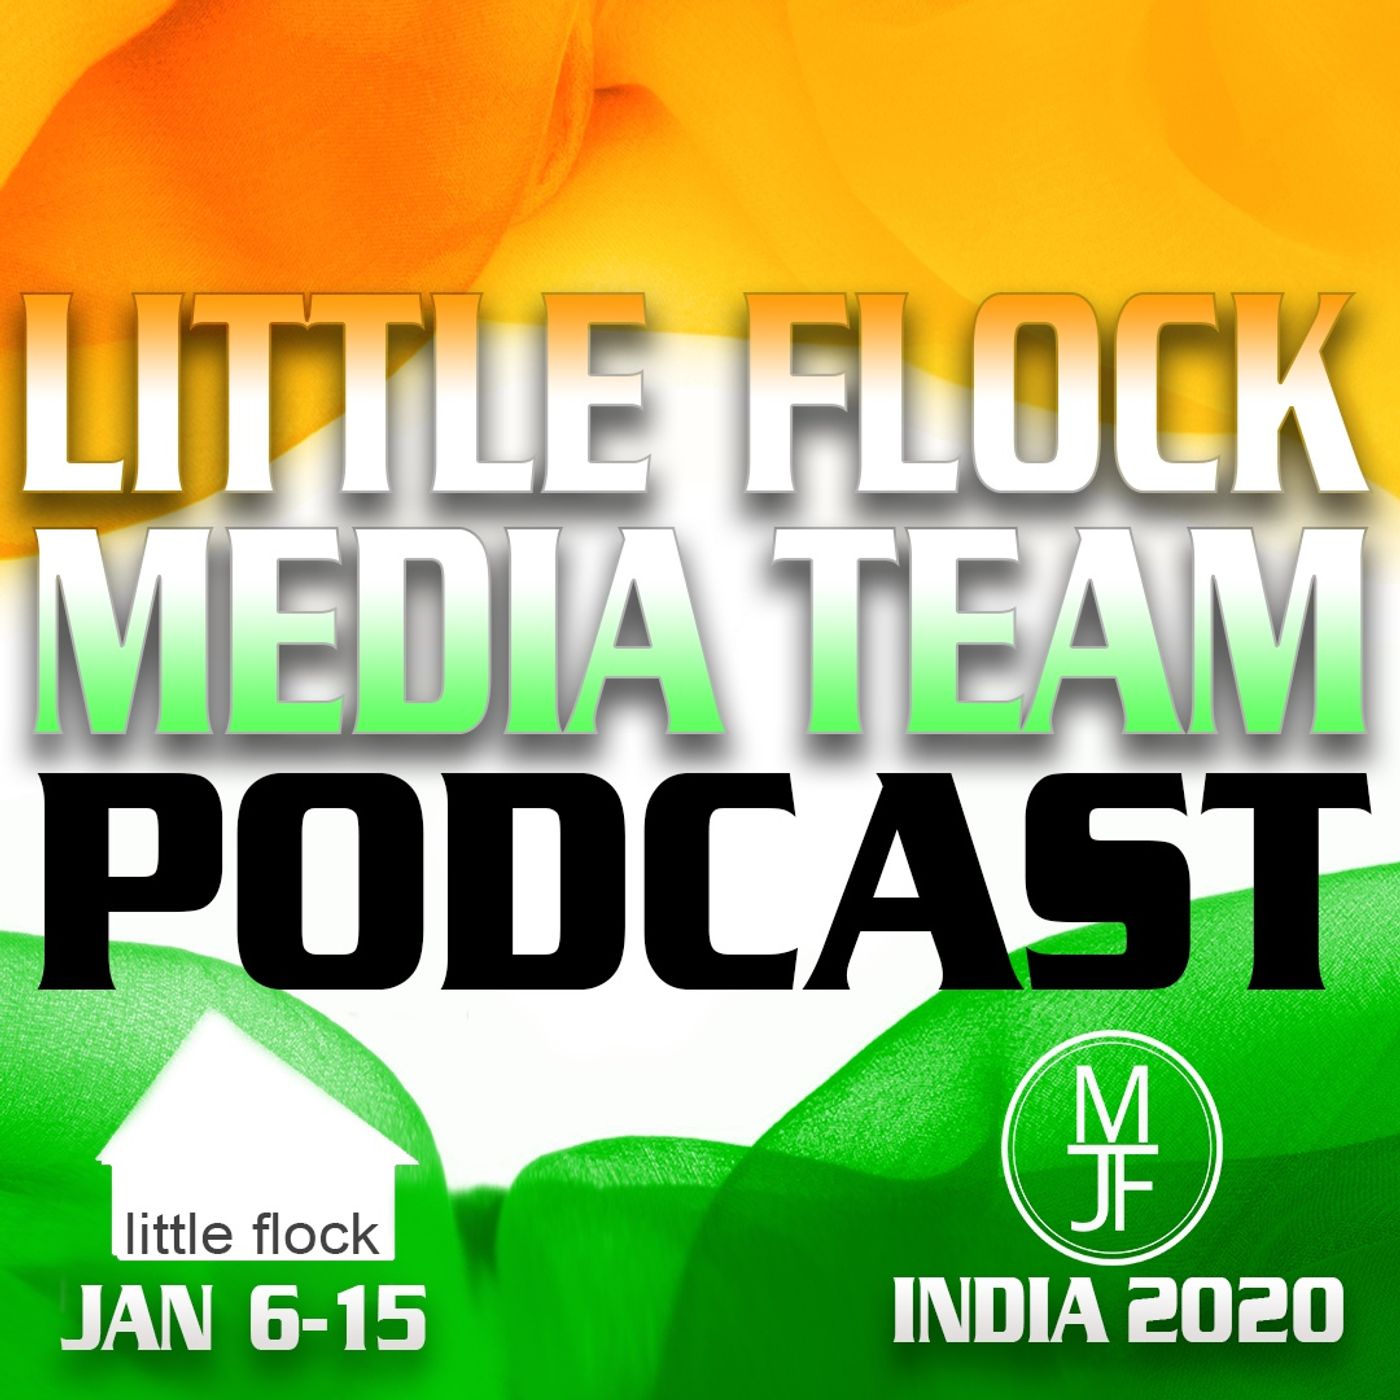 India Media 2020 Podcast 3: "THE TRIP"